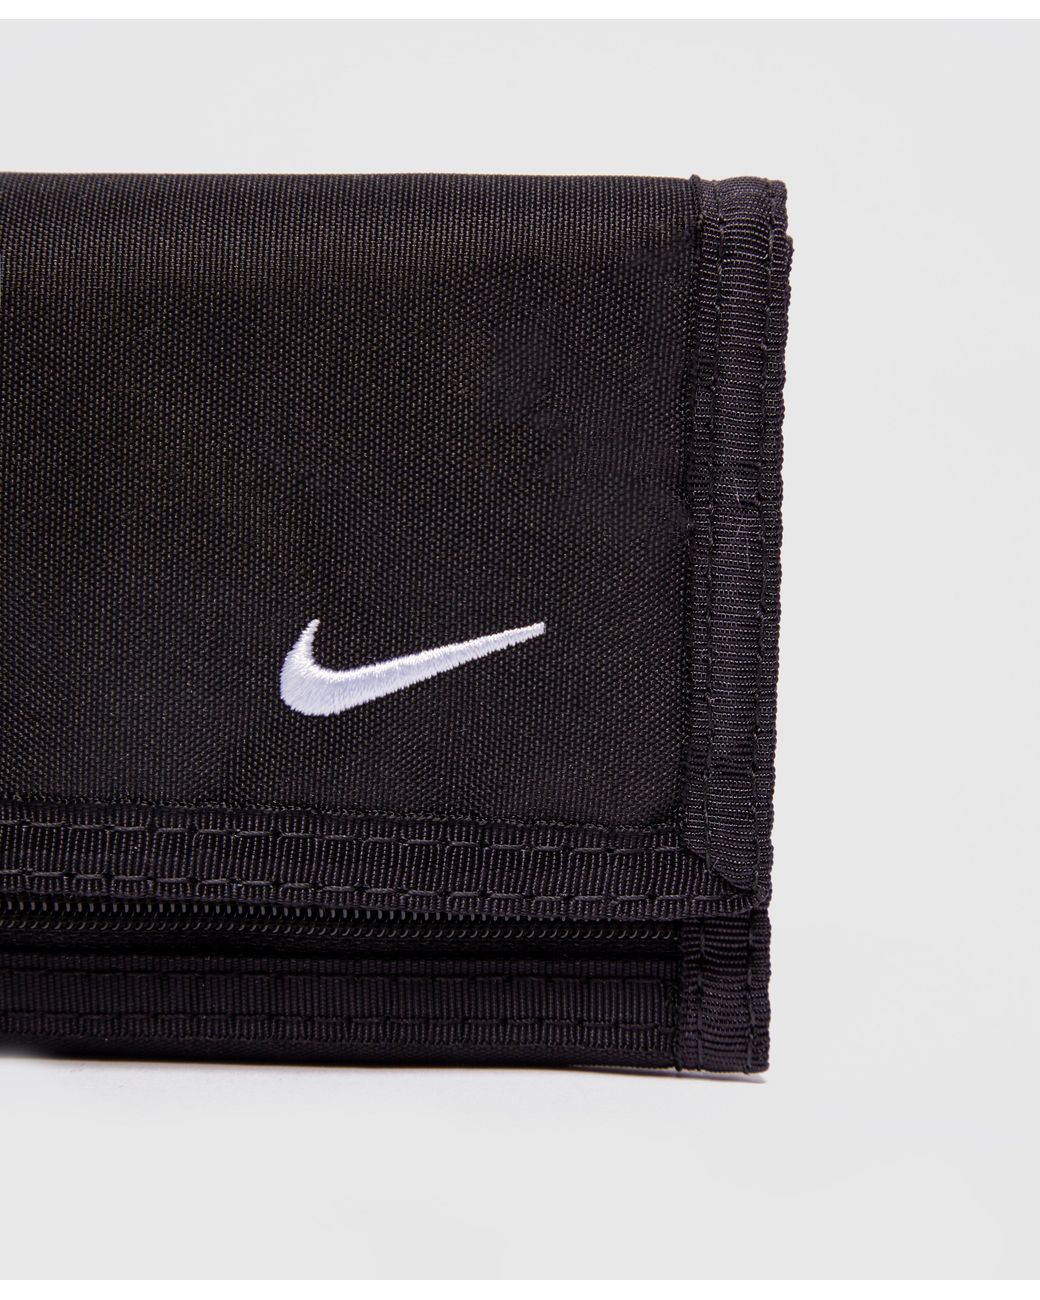 Nike Synthetic Basic Wallet in Black for Men | Lyst